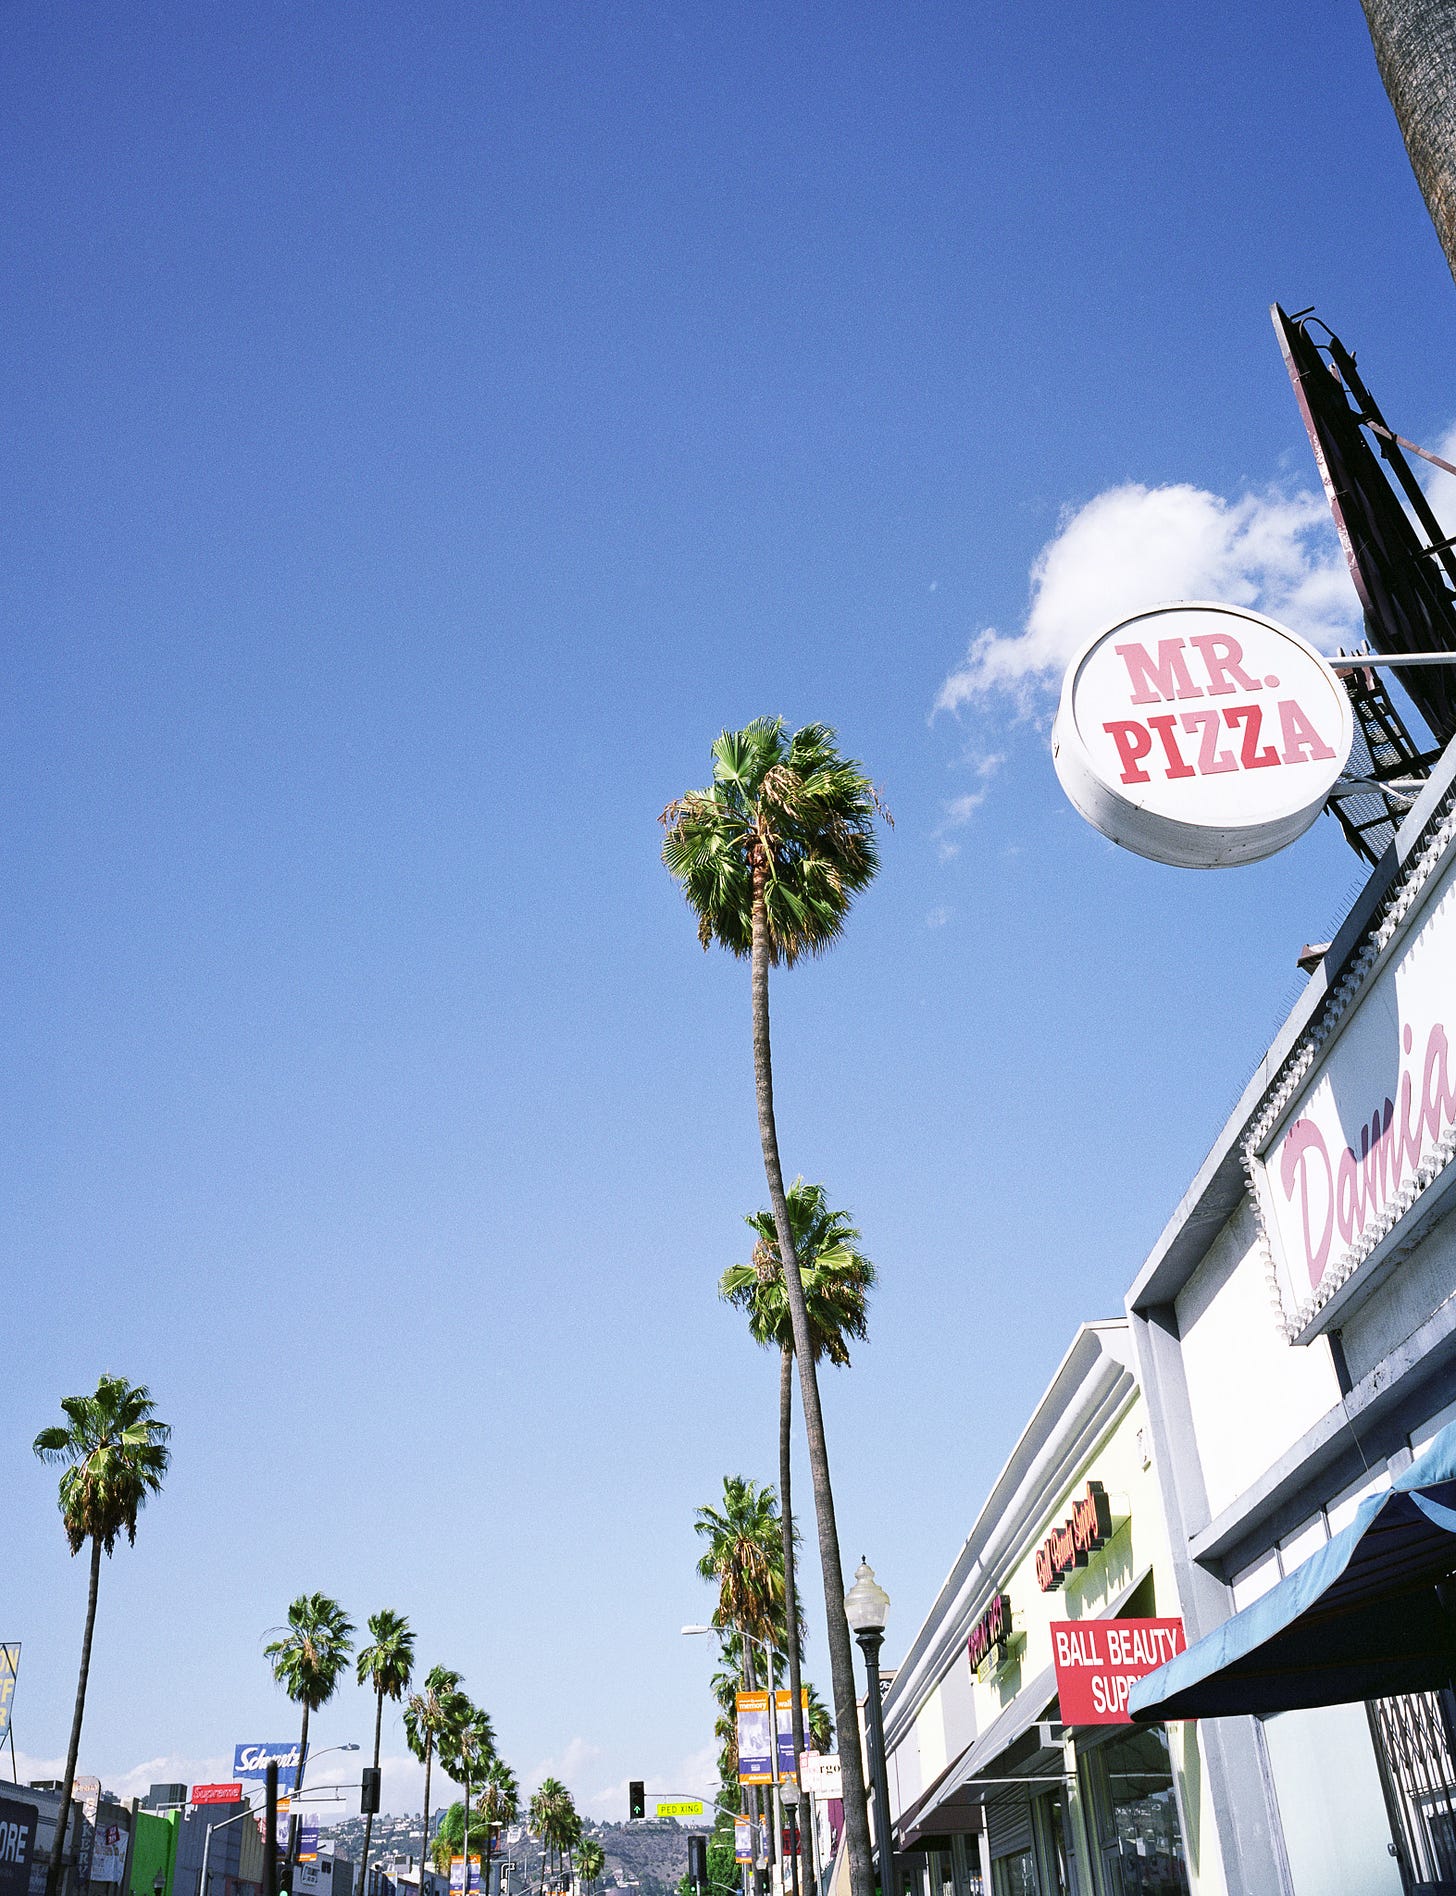 Mr. Pizza sign, Fairfax District, Los Angeles